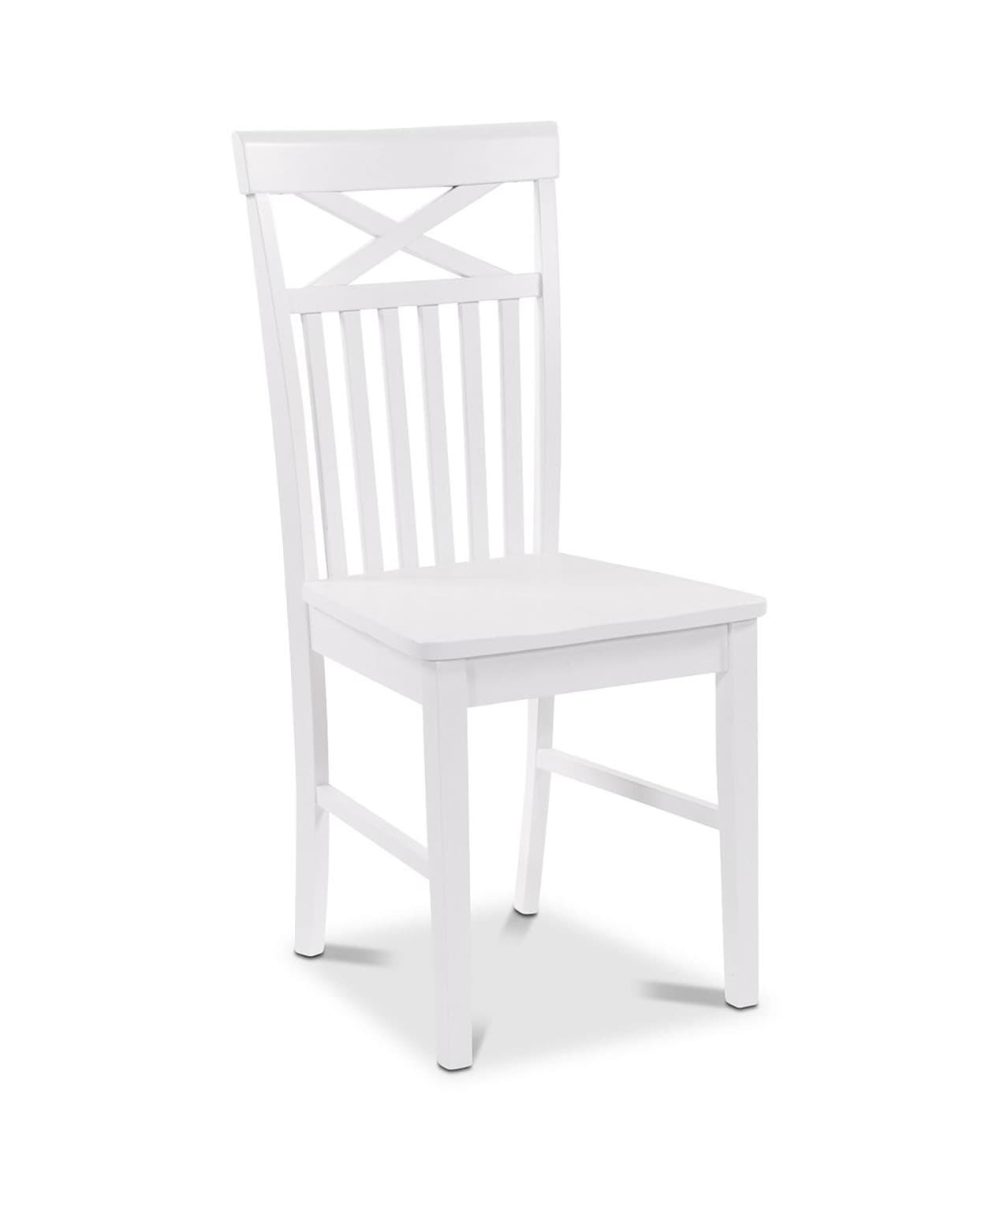 sander-chair-white-profile.jpg